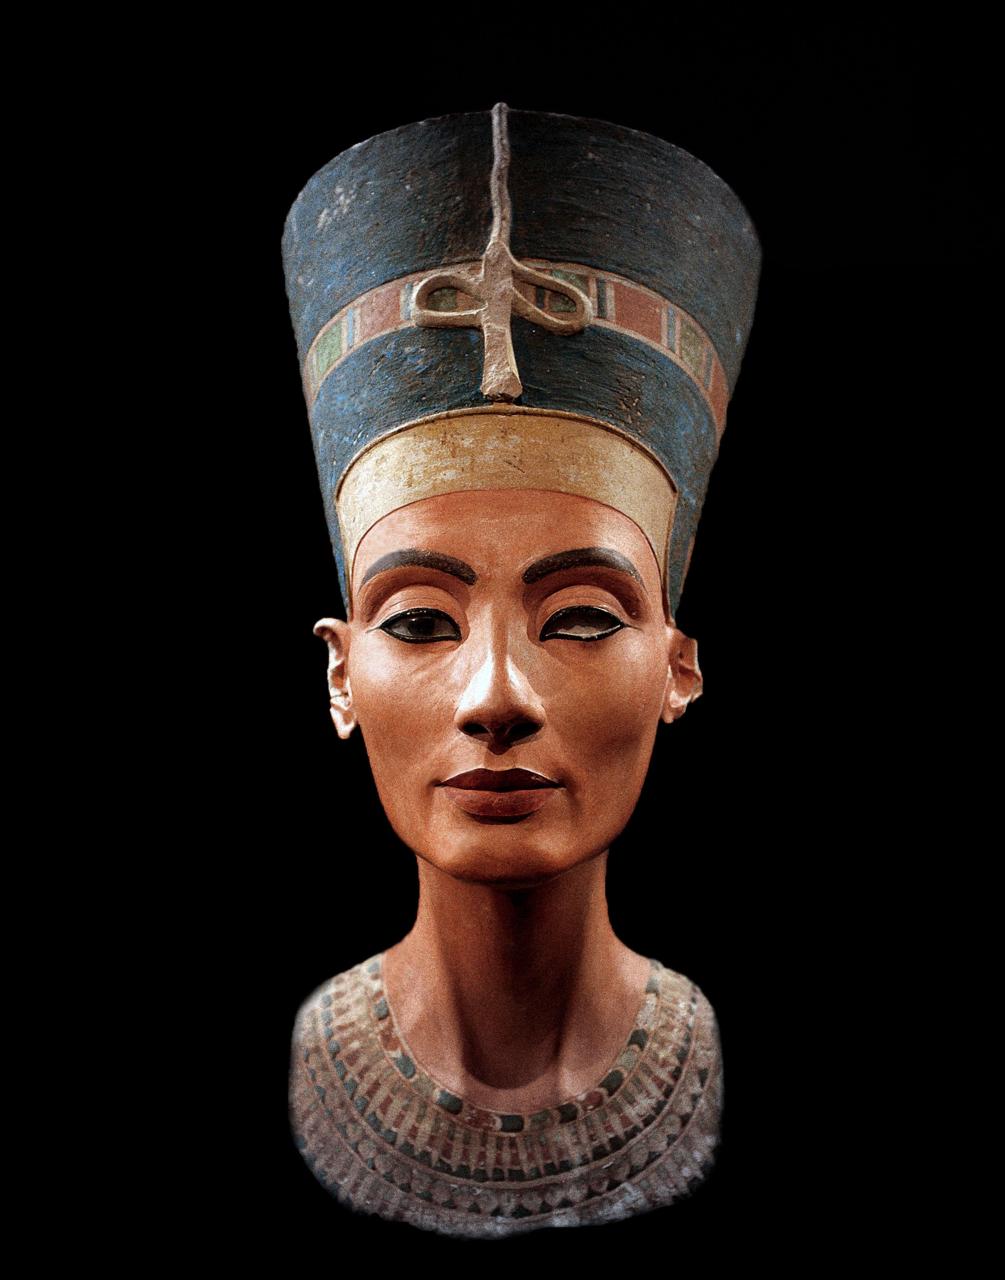 El famoso busto de la reina Nefertiti ha deleitado a multitudes durante un siglo, pero nunca se ha encontrado la momia de la antigua monarca.